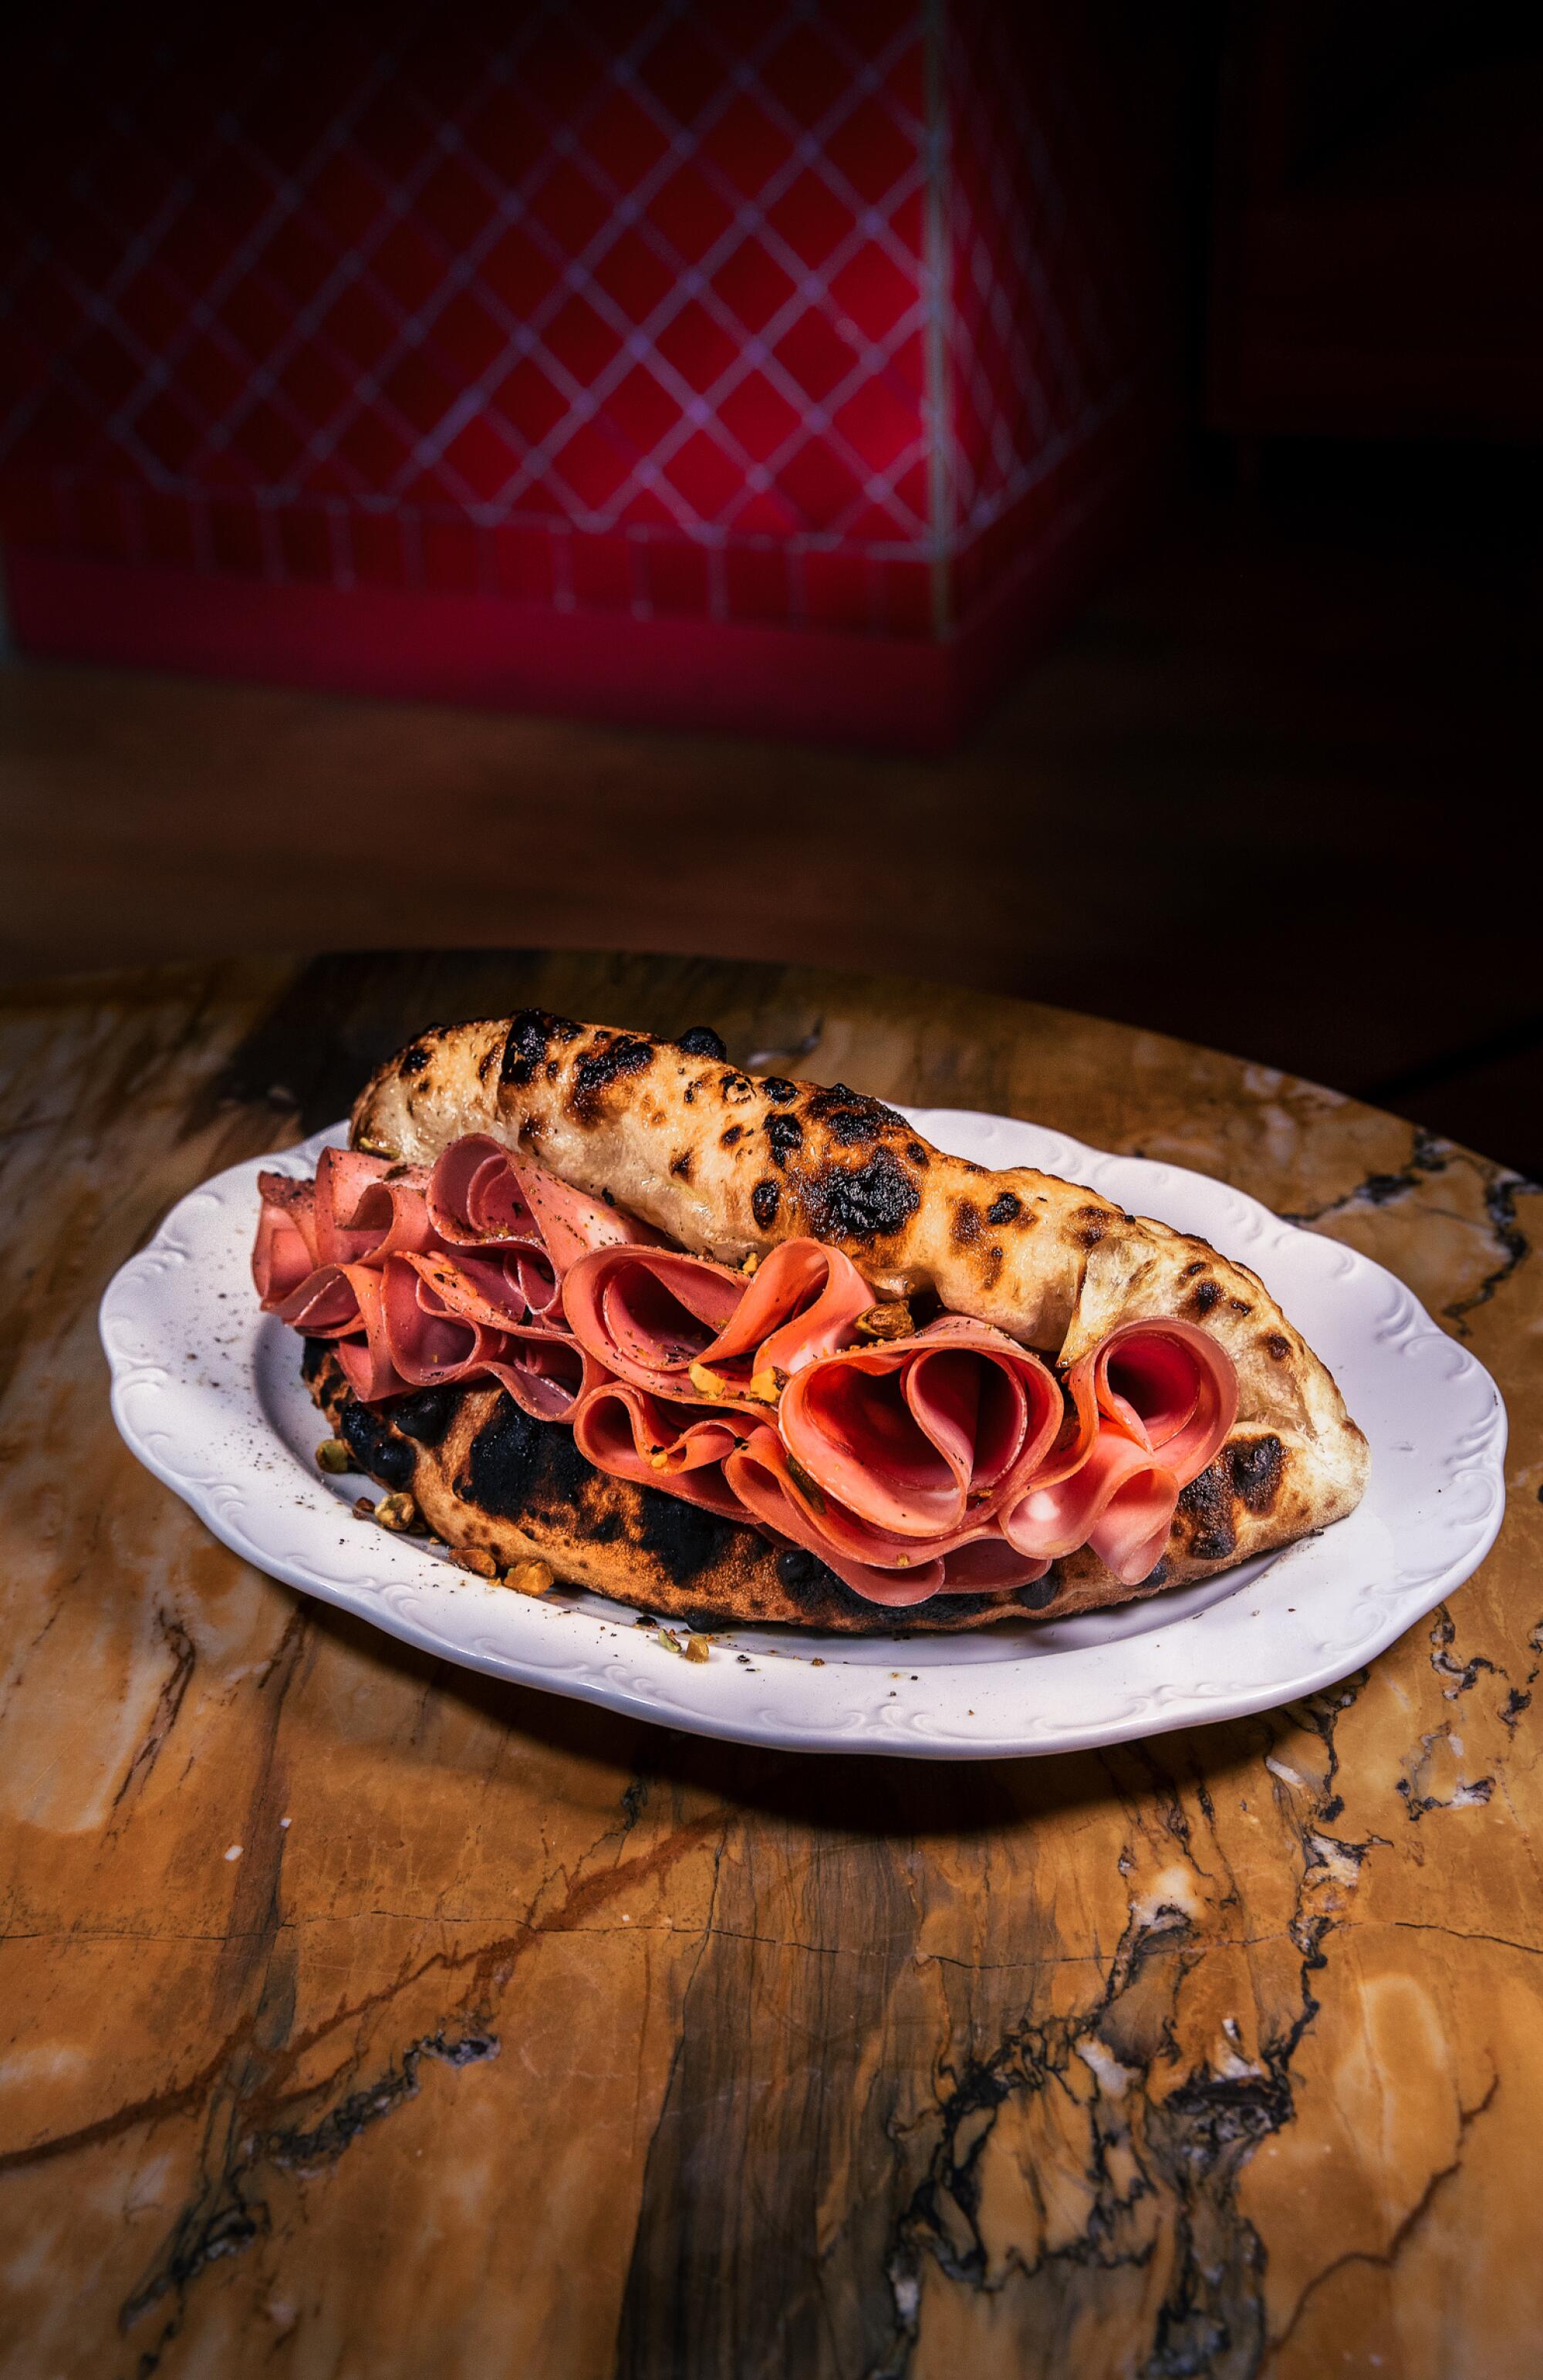 La Mortazza, a folded-over pizza sandwich with mortadella peeking out at the edges.